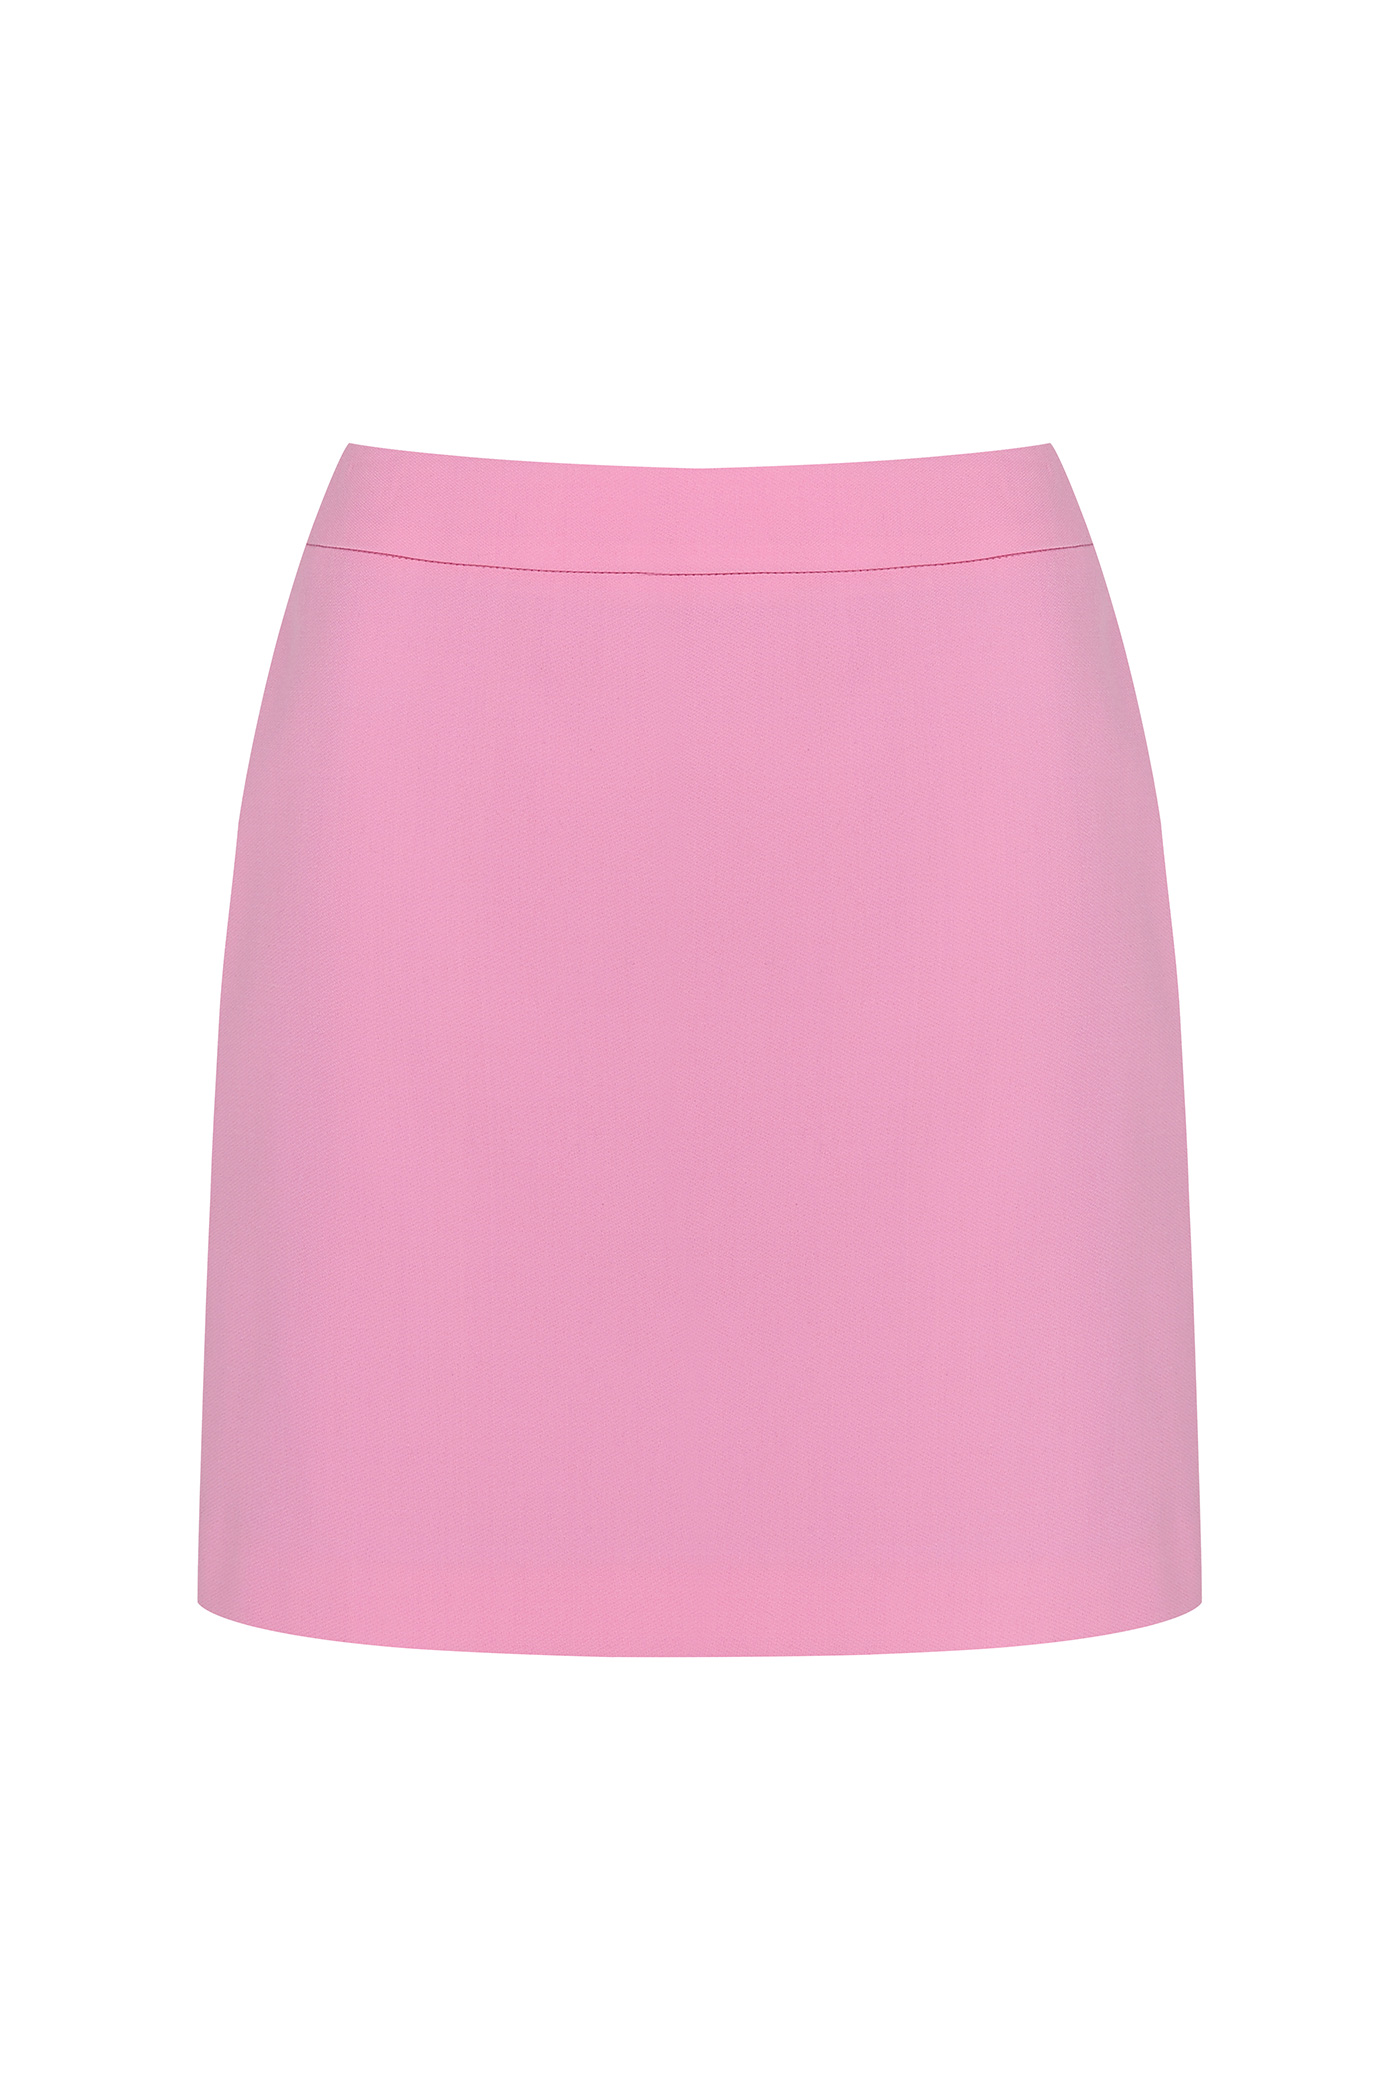 Wool mini skirt-2color